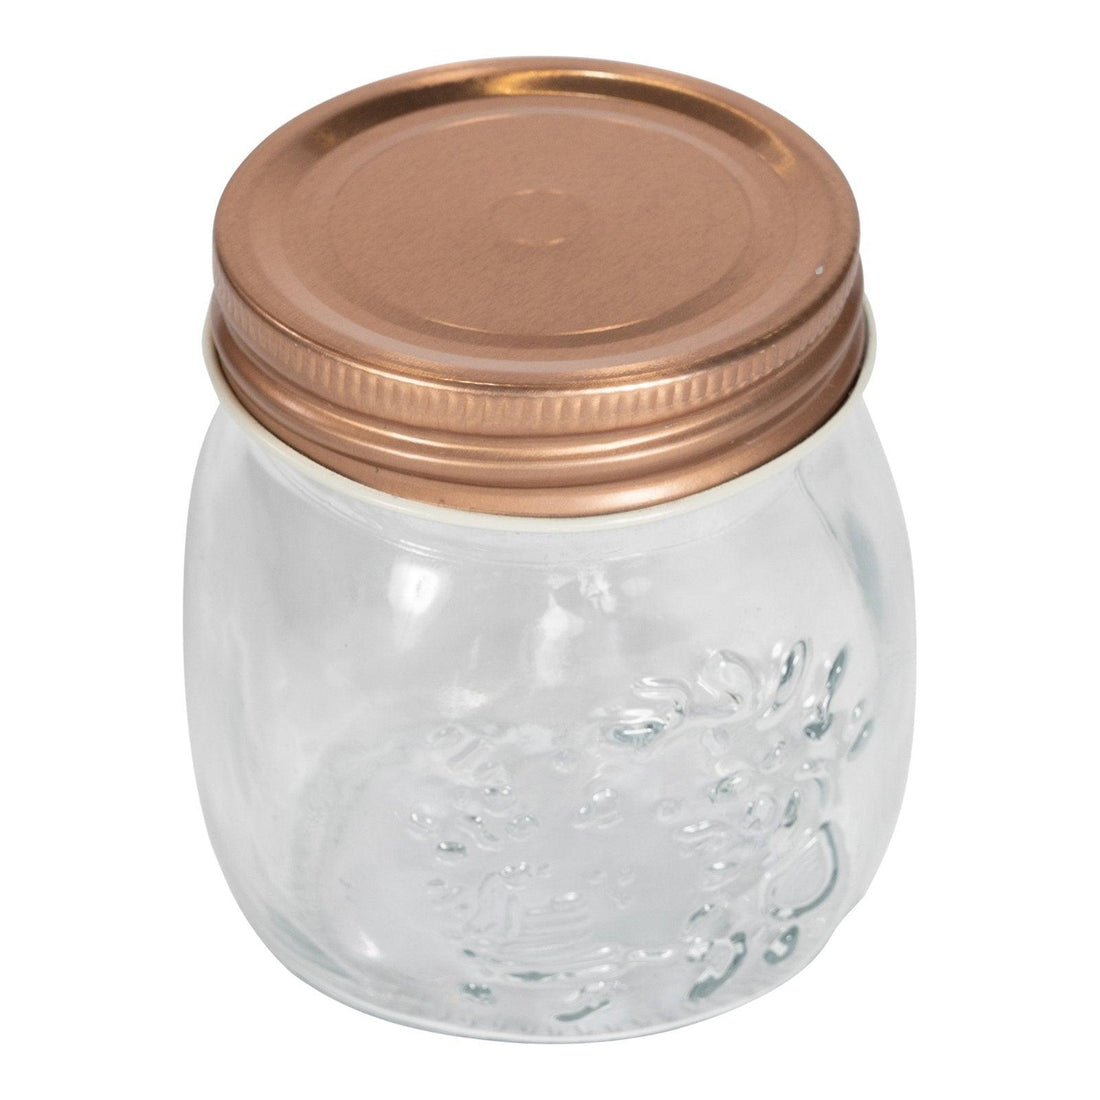 Kitchen Glass Embossed Storage Jar With Copper Screw Lid - Small - £9.99 - Kitchen Storage 